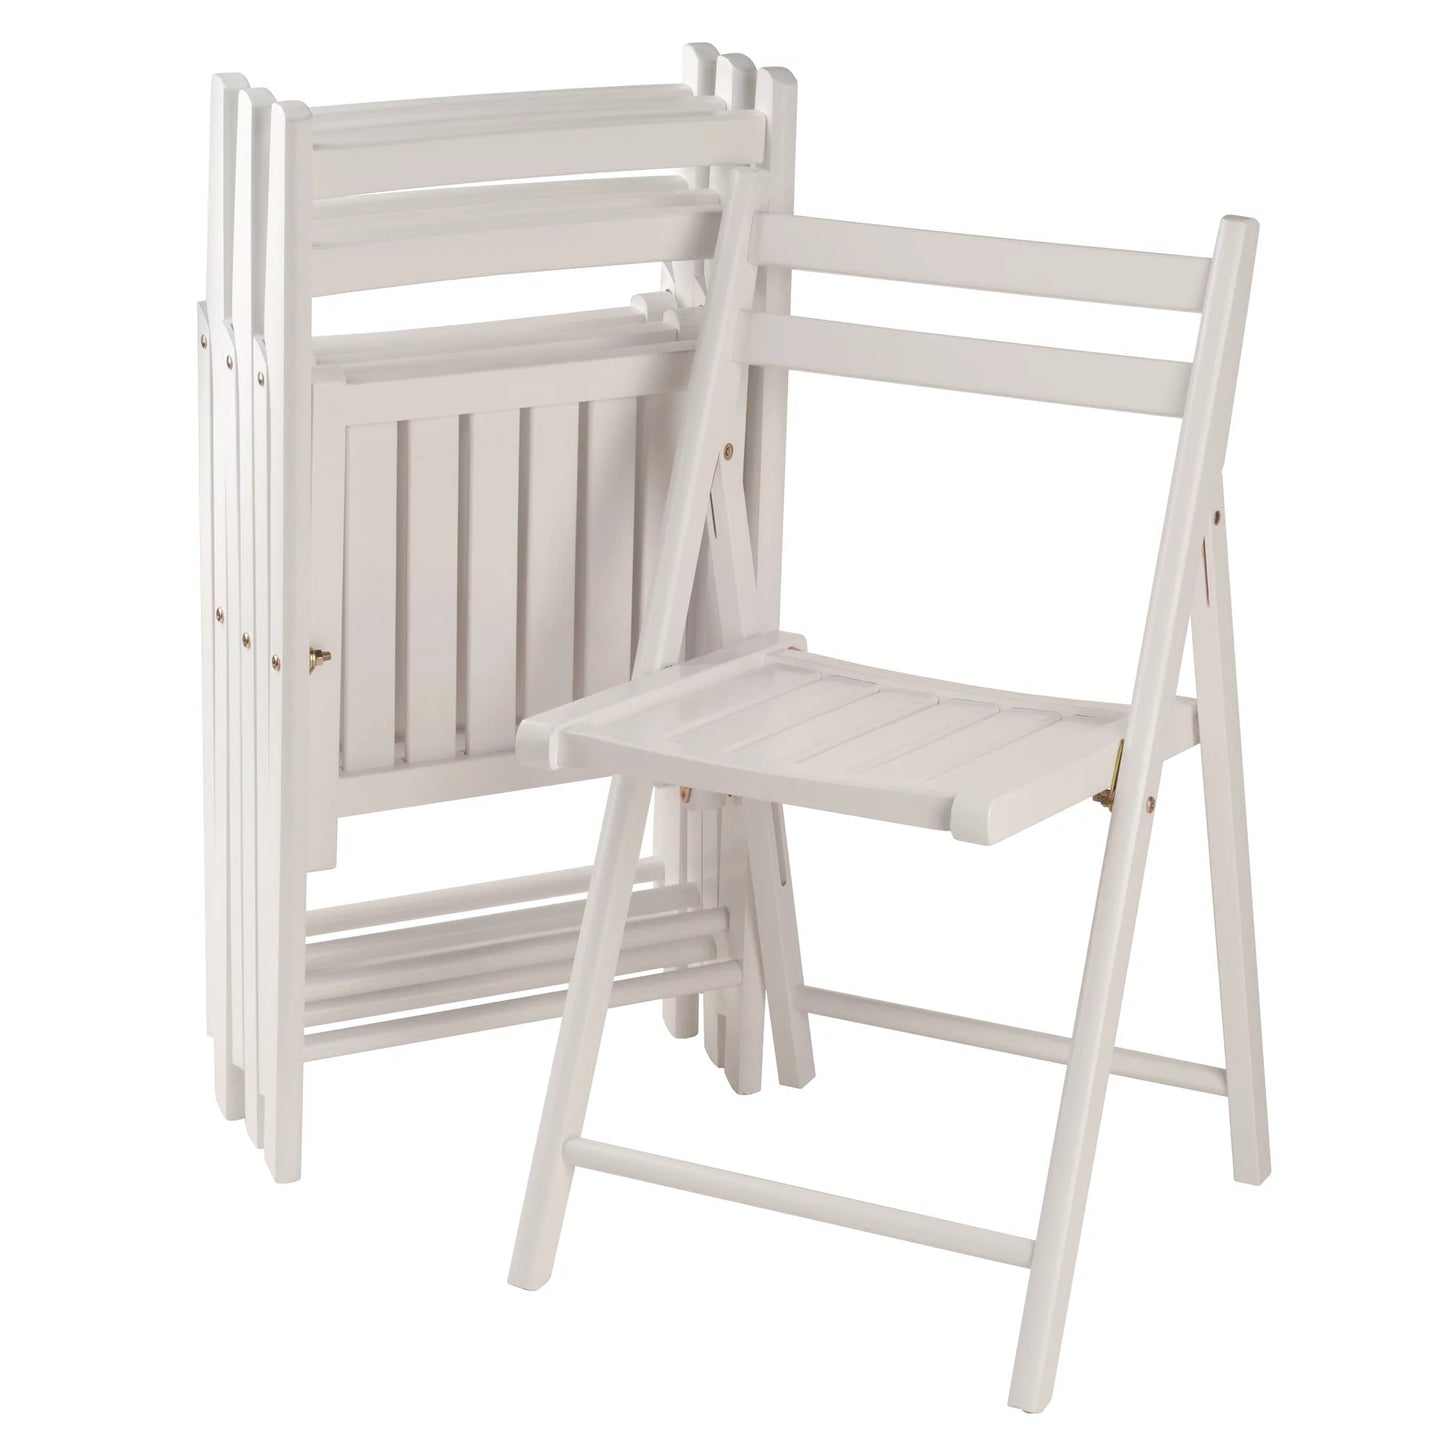 Wood 4-PC Folding Chair Set, Teak, Multiple Finishes